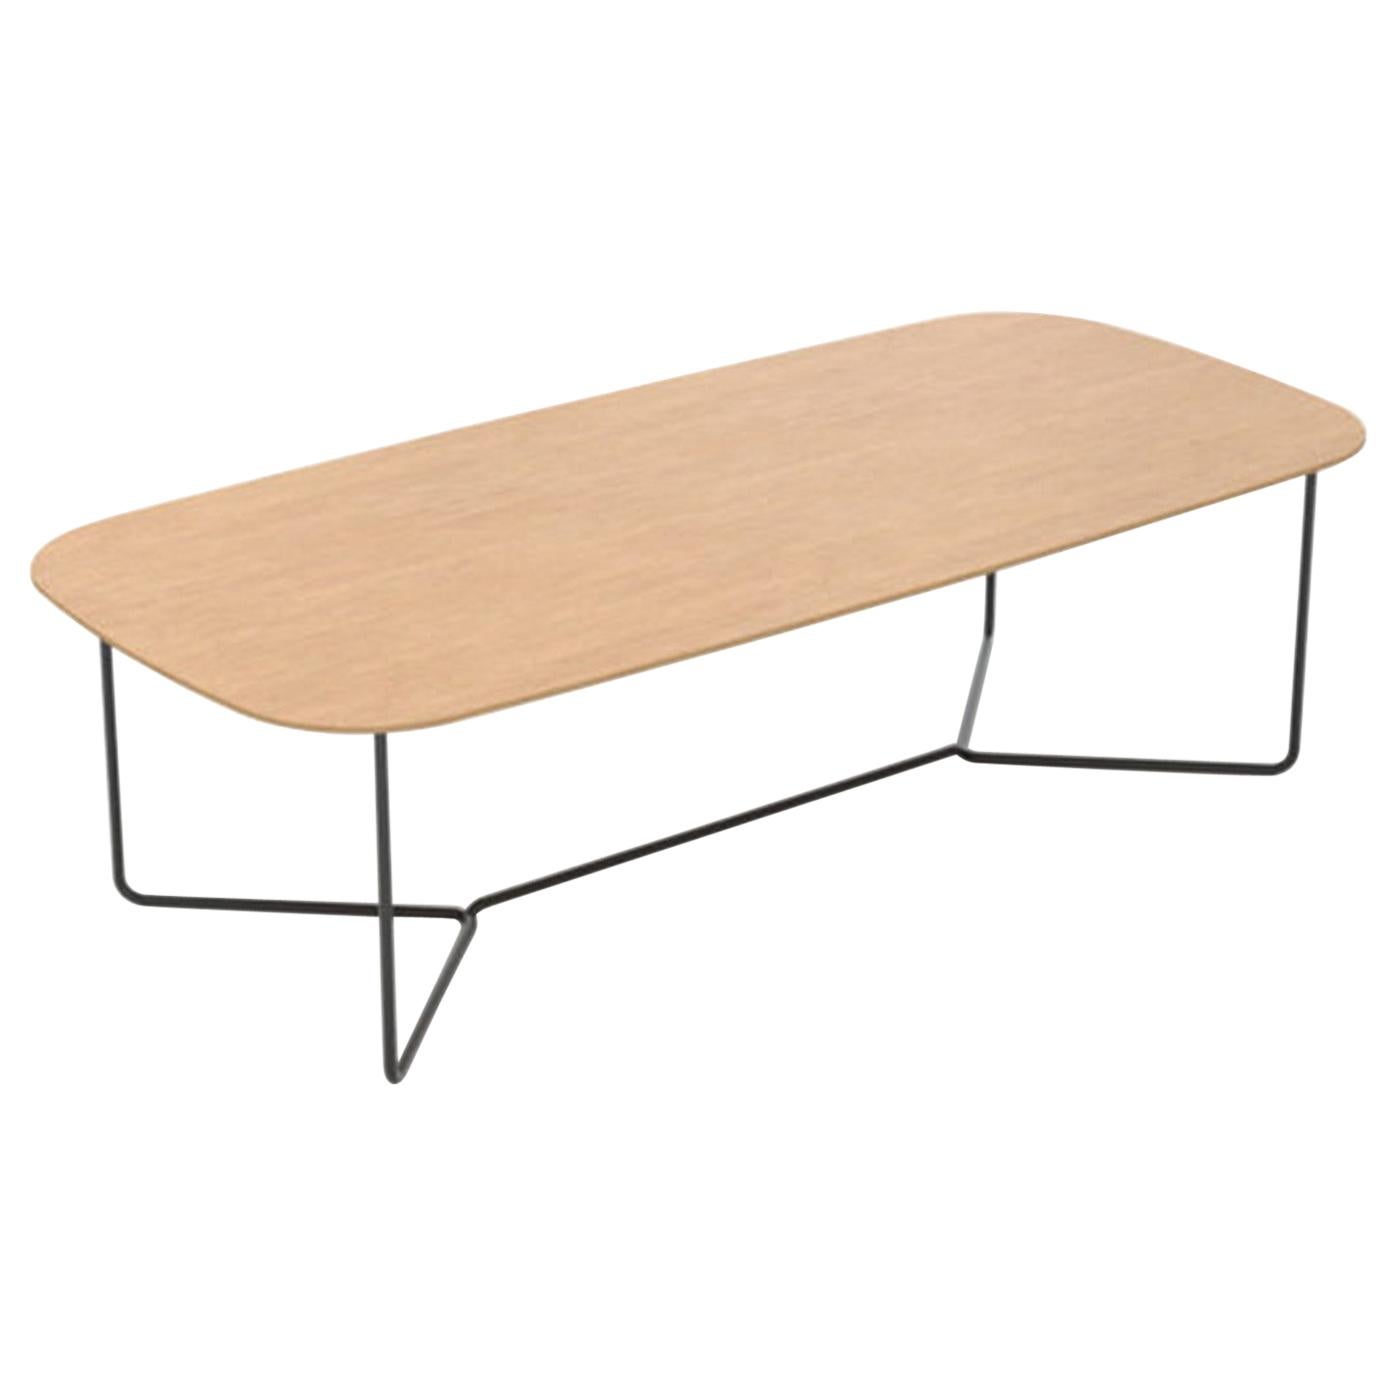 Inno Bondo Table Designed by Harri Korhonen